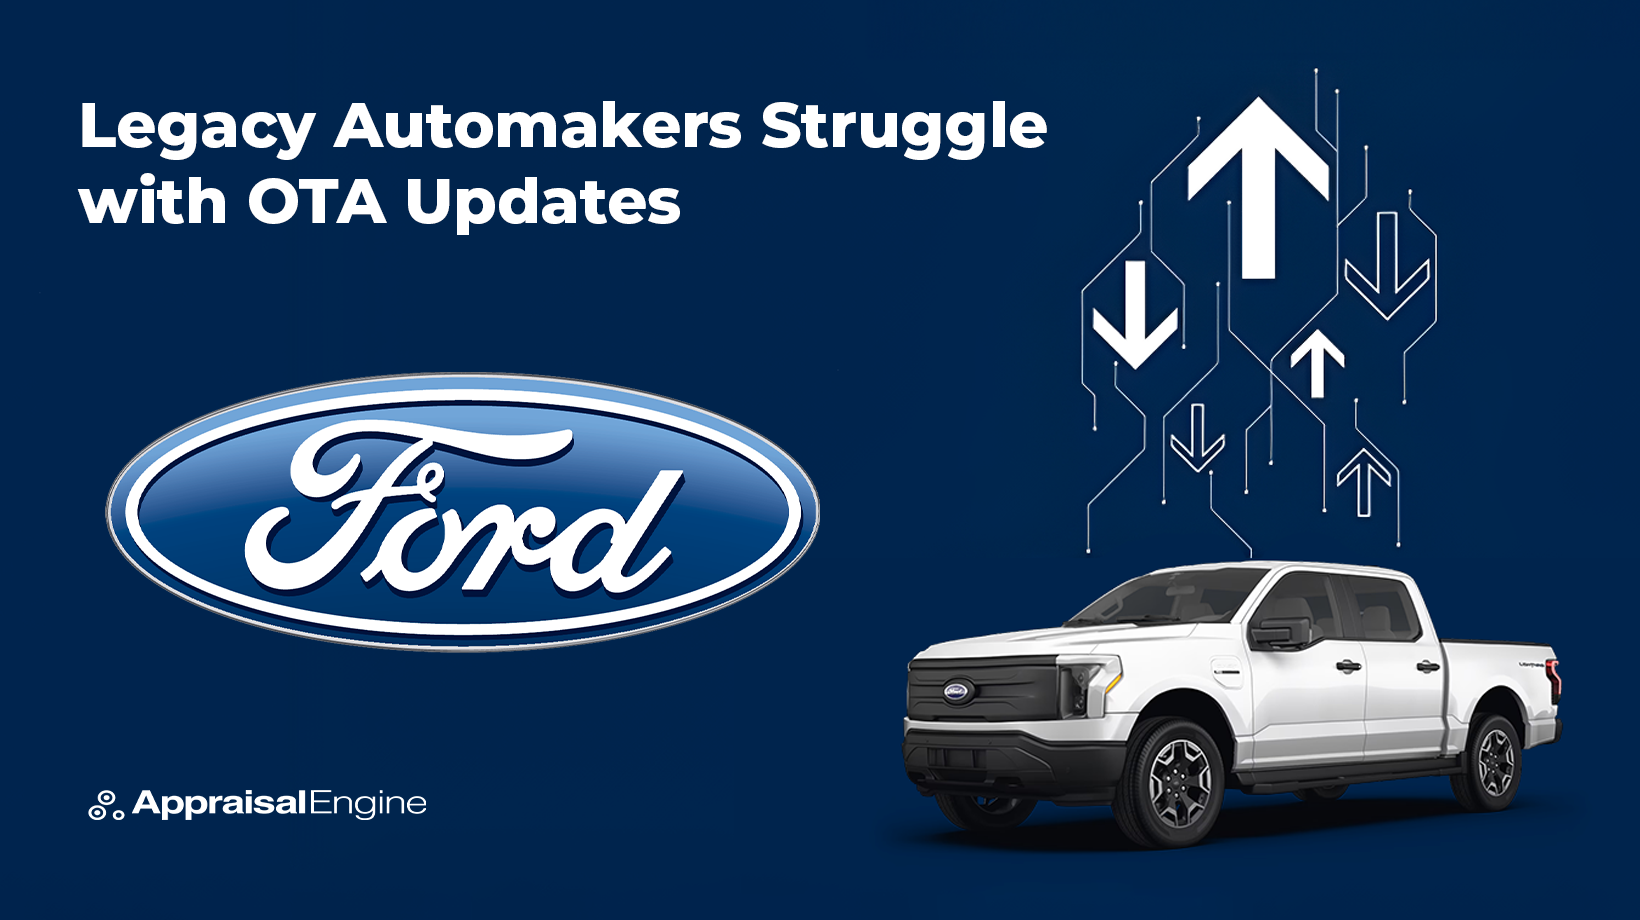 Embracing Change Legacy Automakers' OTA Update Hurdles